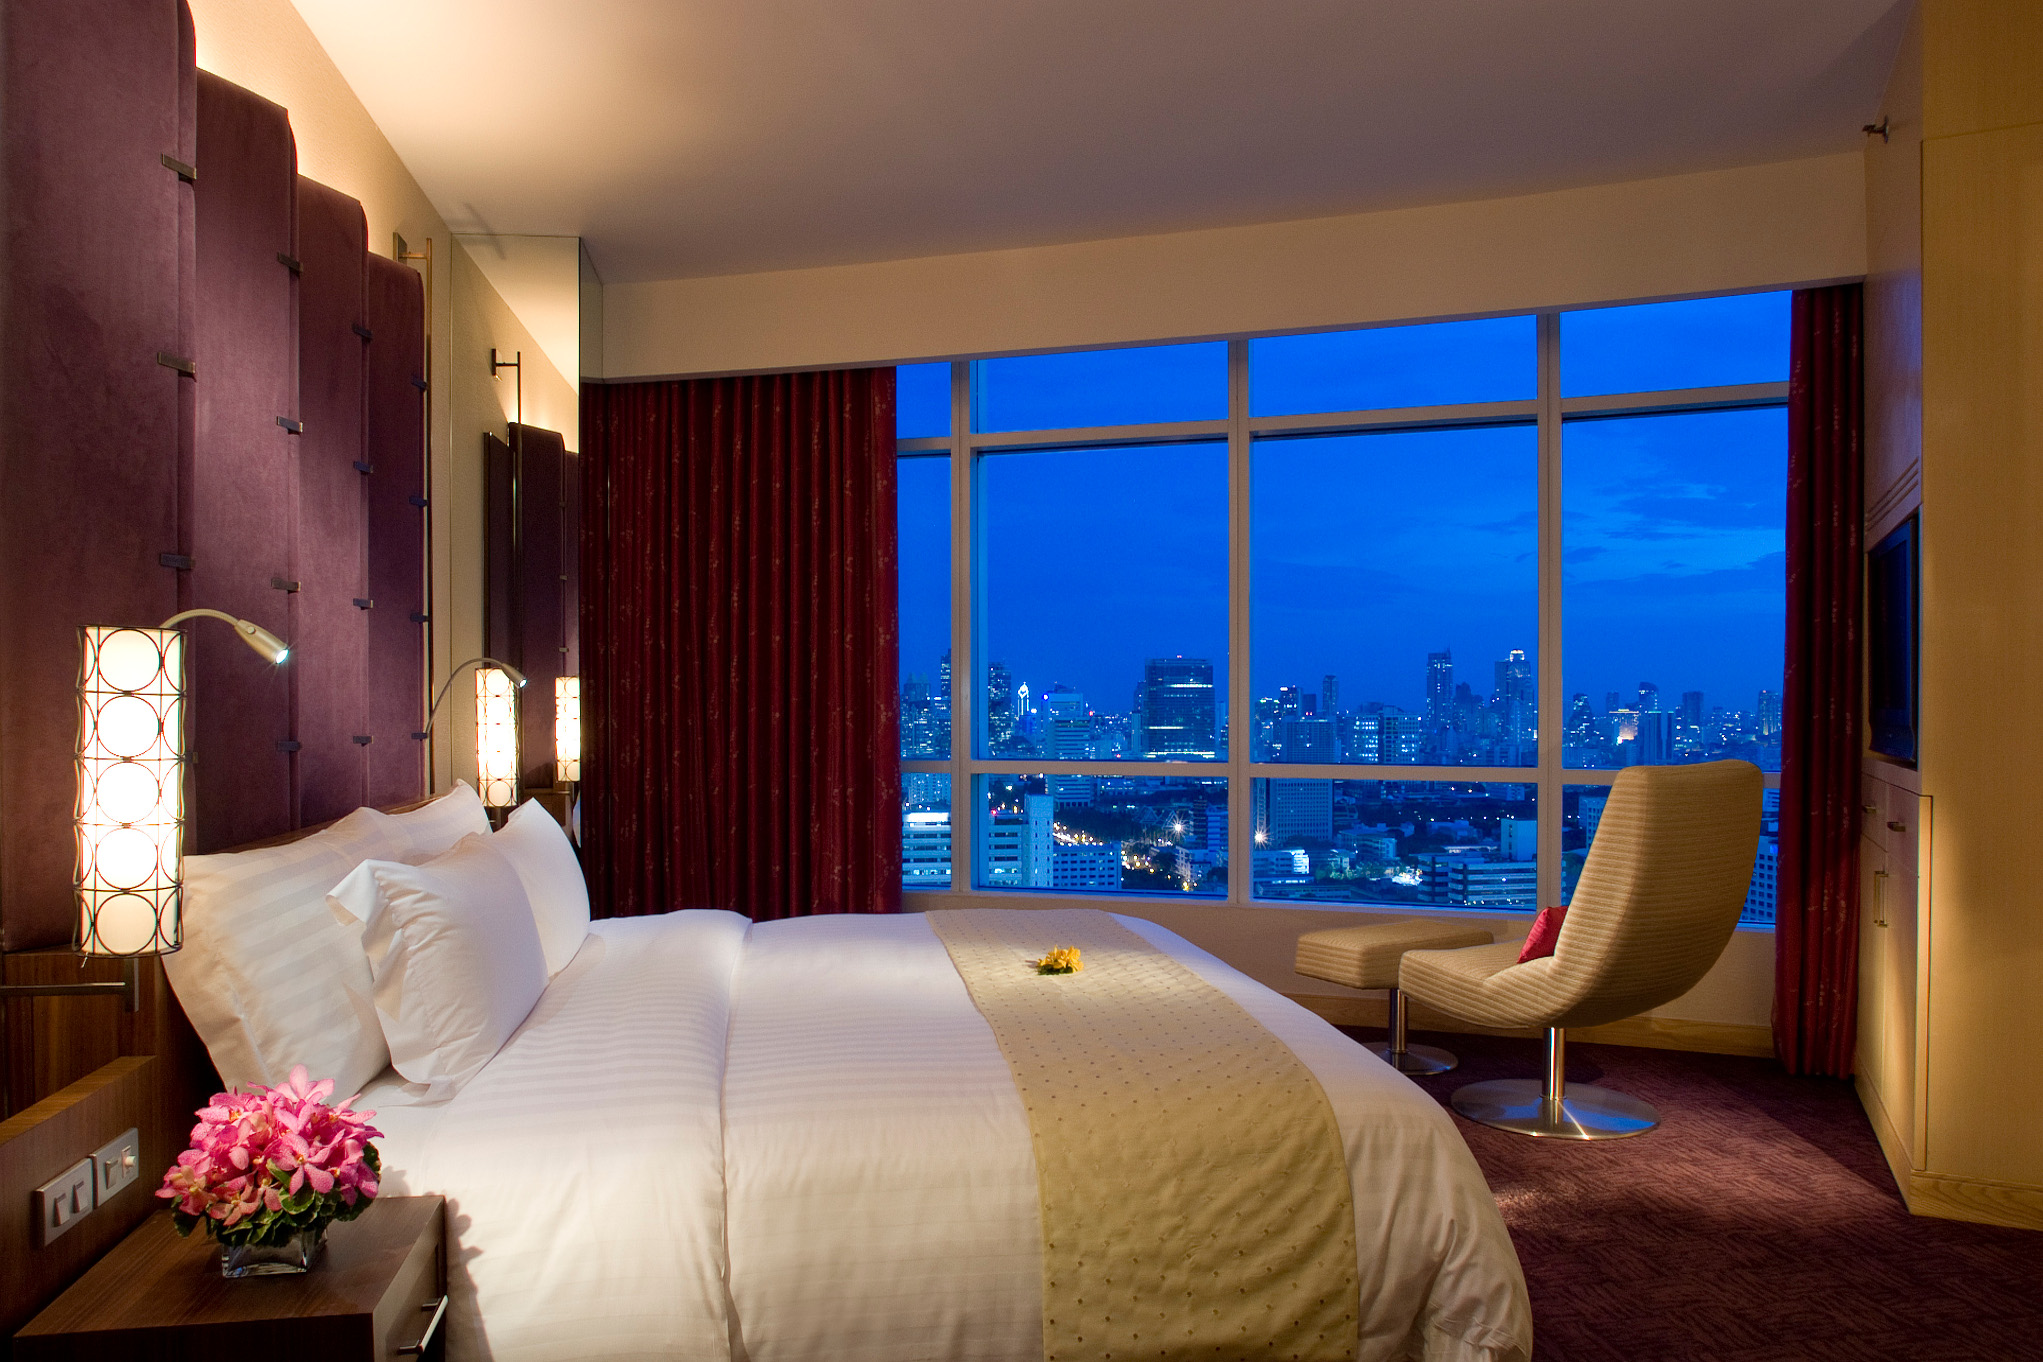 Oleg said my room is on the. Отель Centara Grand at CENTRALWORLD. Красивая комната. Спальня с панорамными окнами. Спальня в отеле.